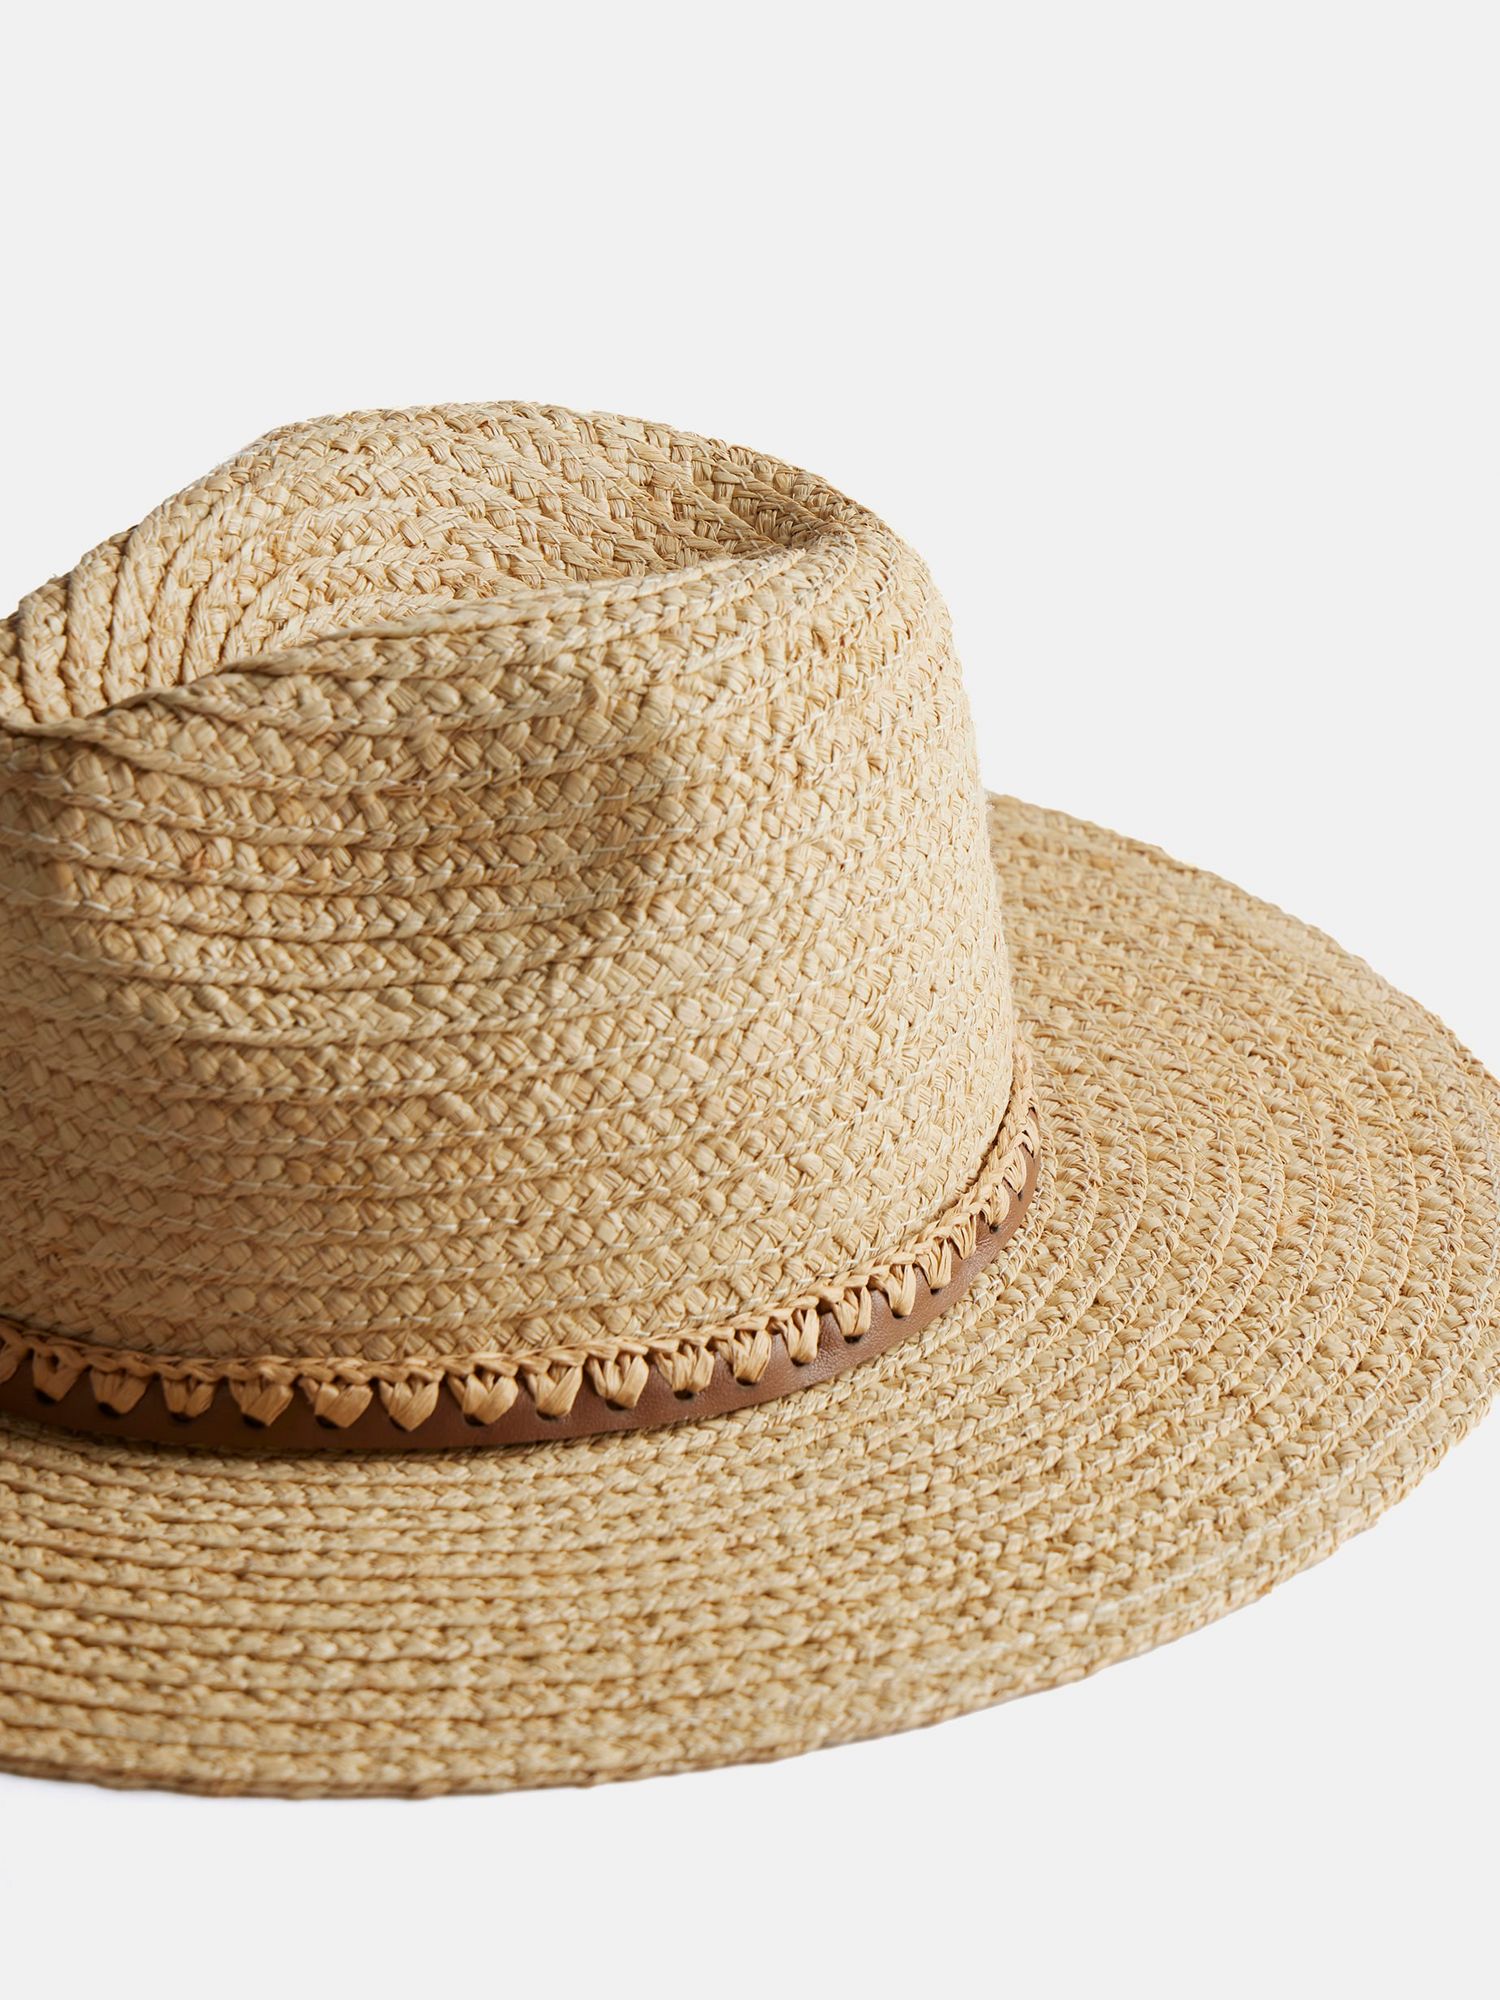 Mint Velvet Straw Fedora Hat, Natural, One Size